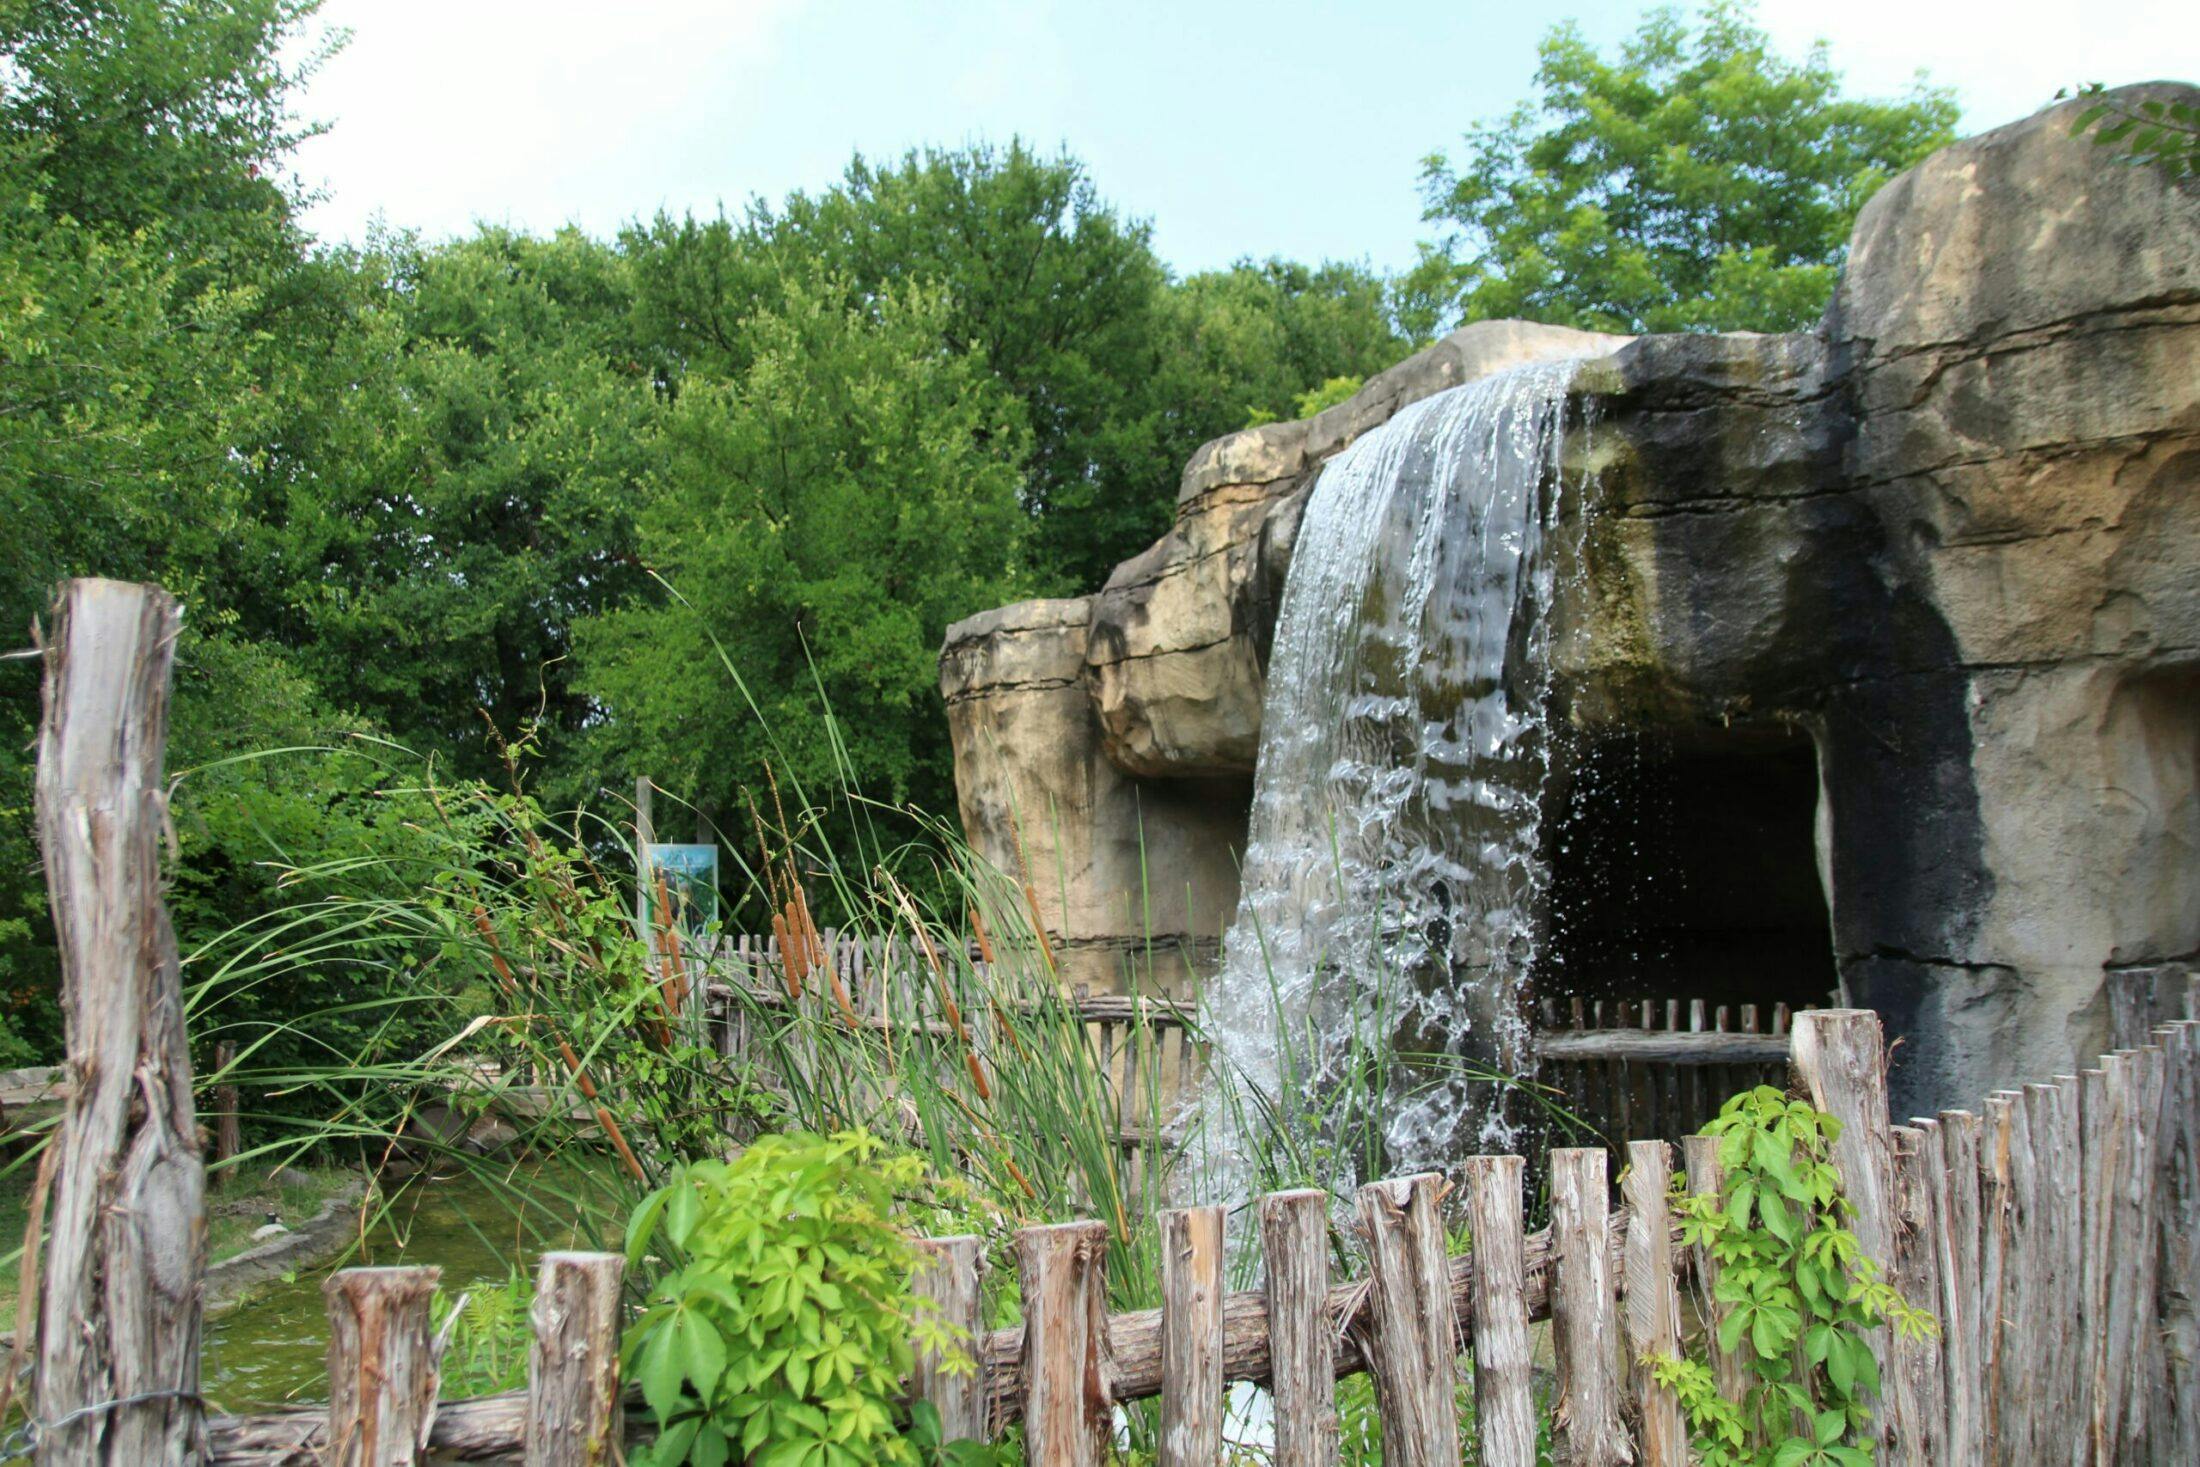 Cameron Park Zoo waterfall